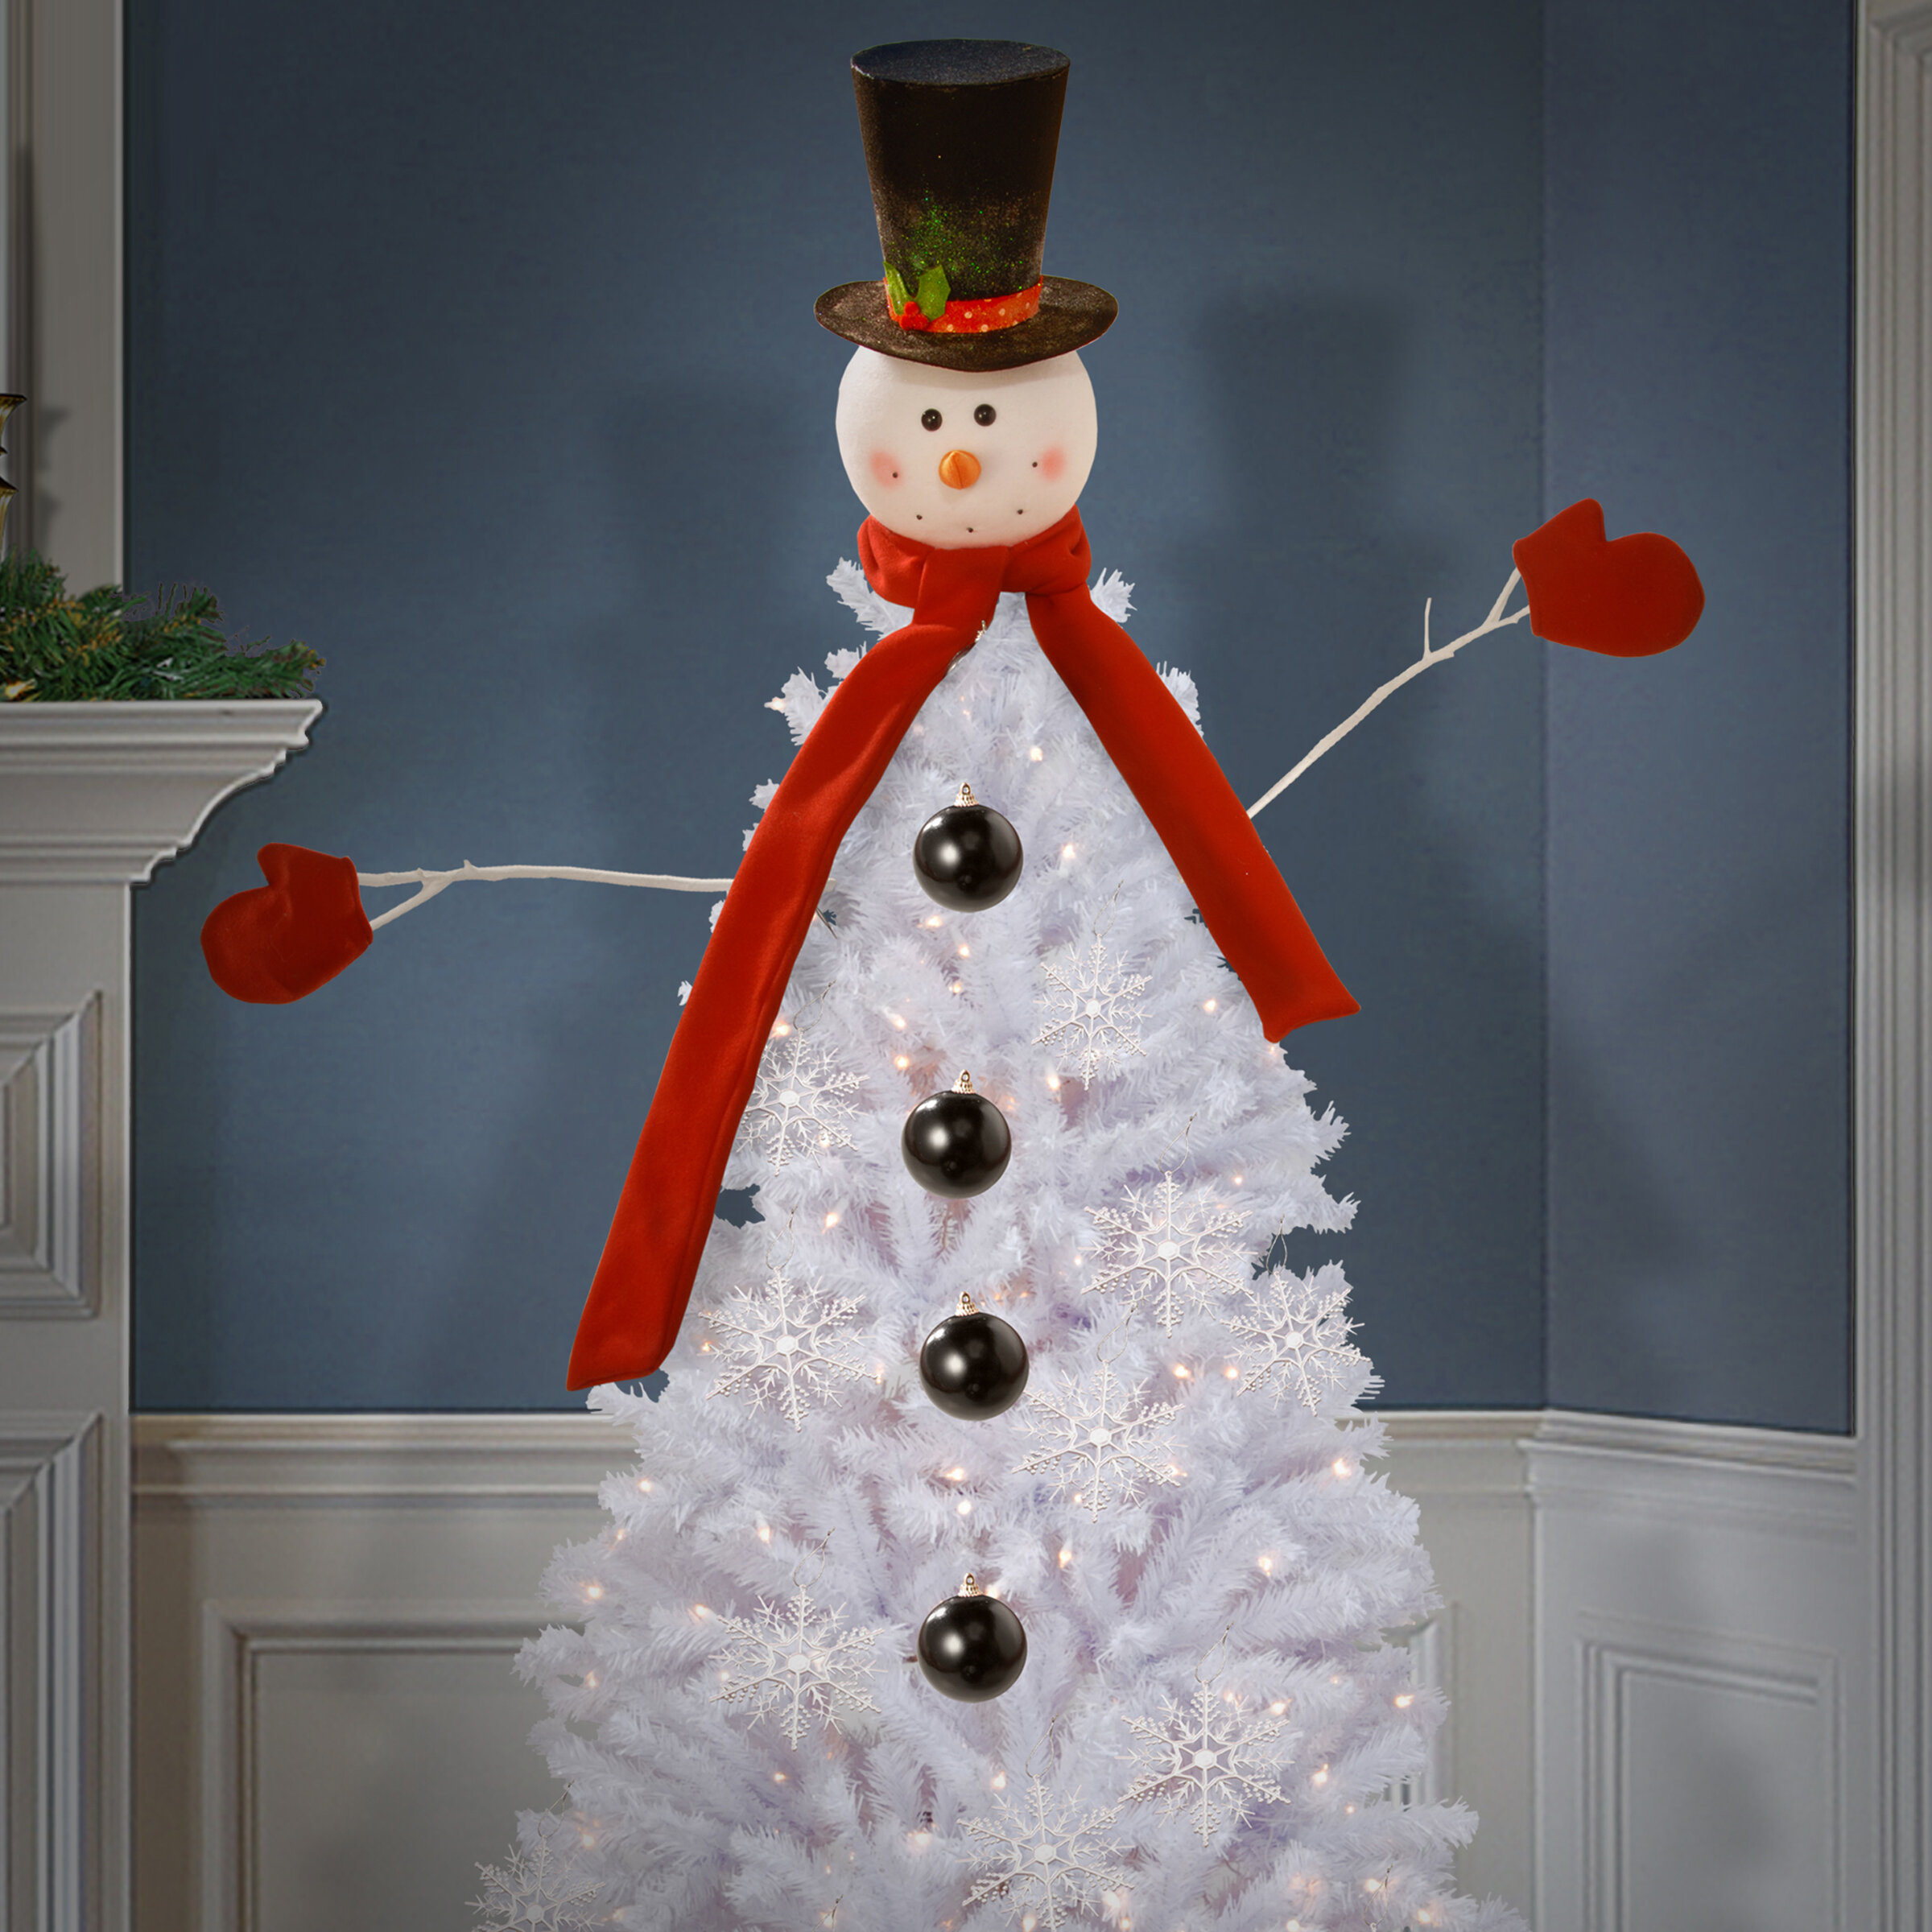 The Holiday Aisle 21 Piece Snowman Kit Tree Dress Up Christmas Ornament Accessory Set Reviews Wayfair